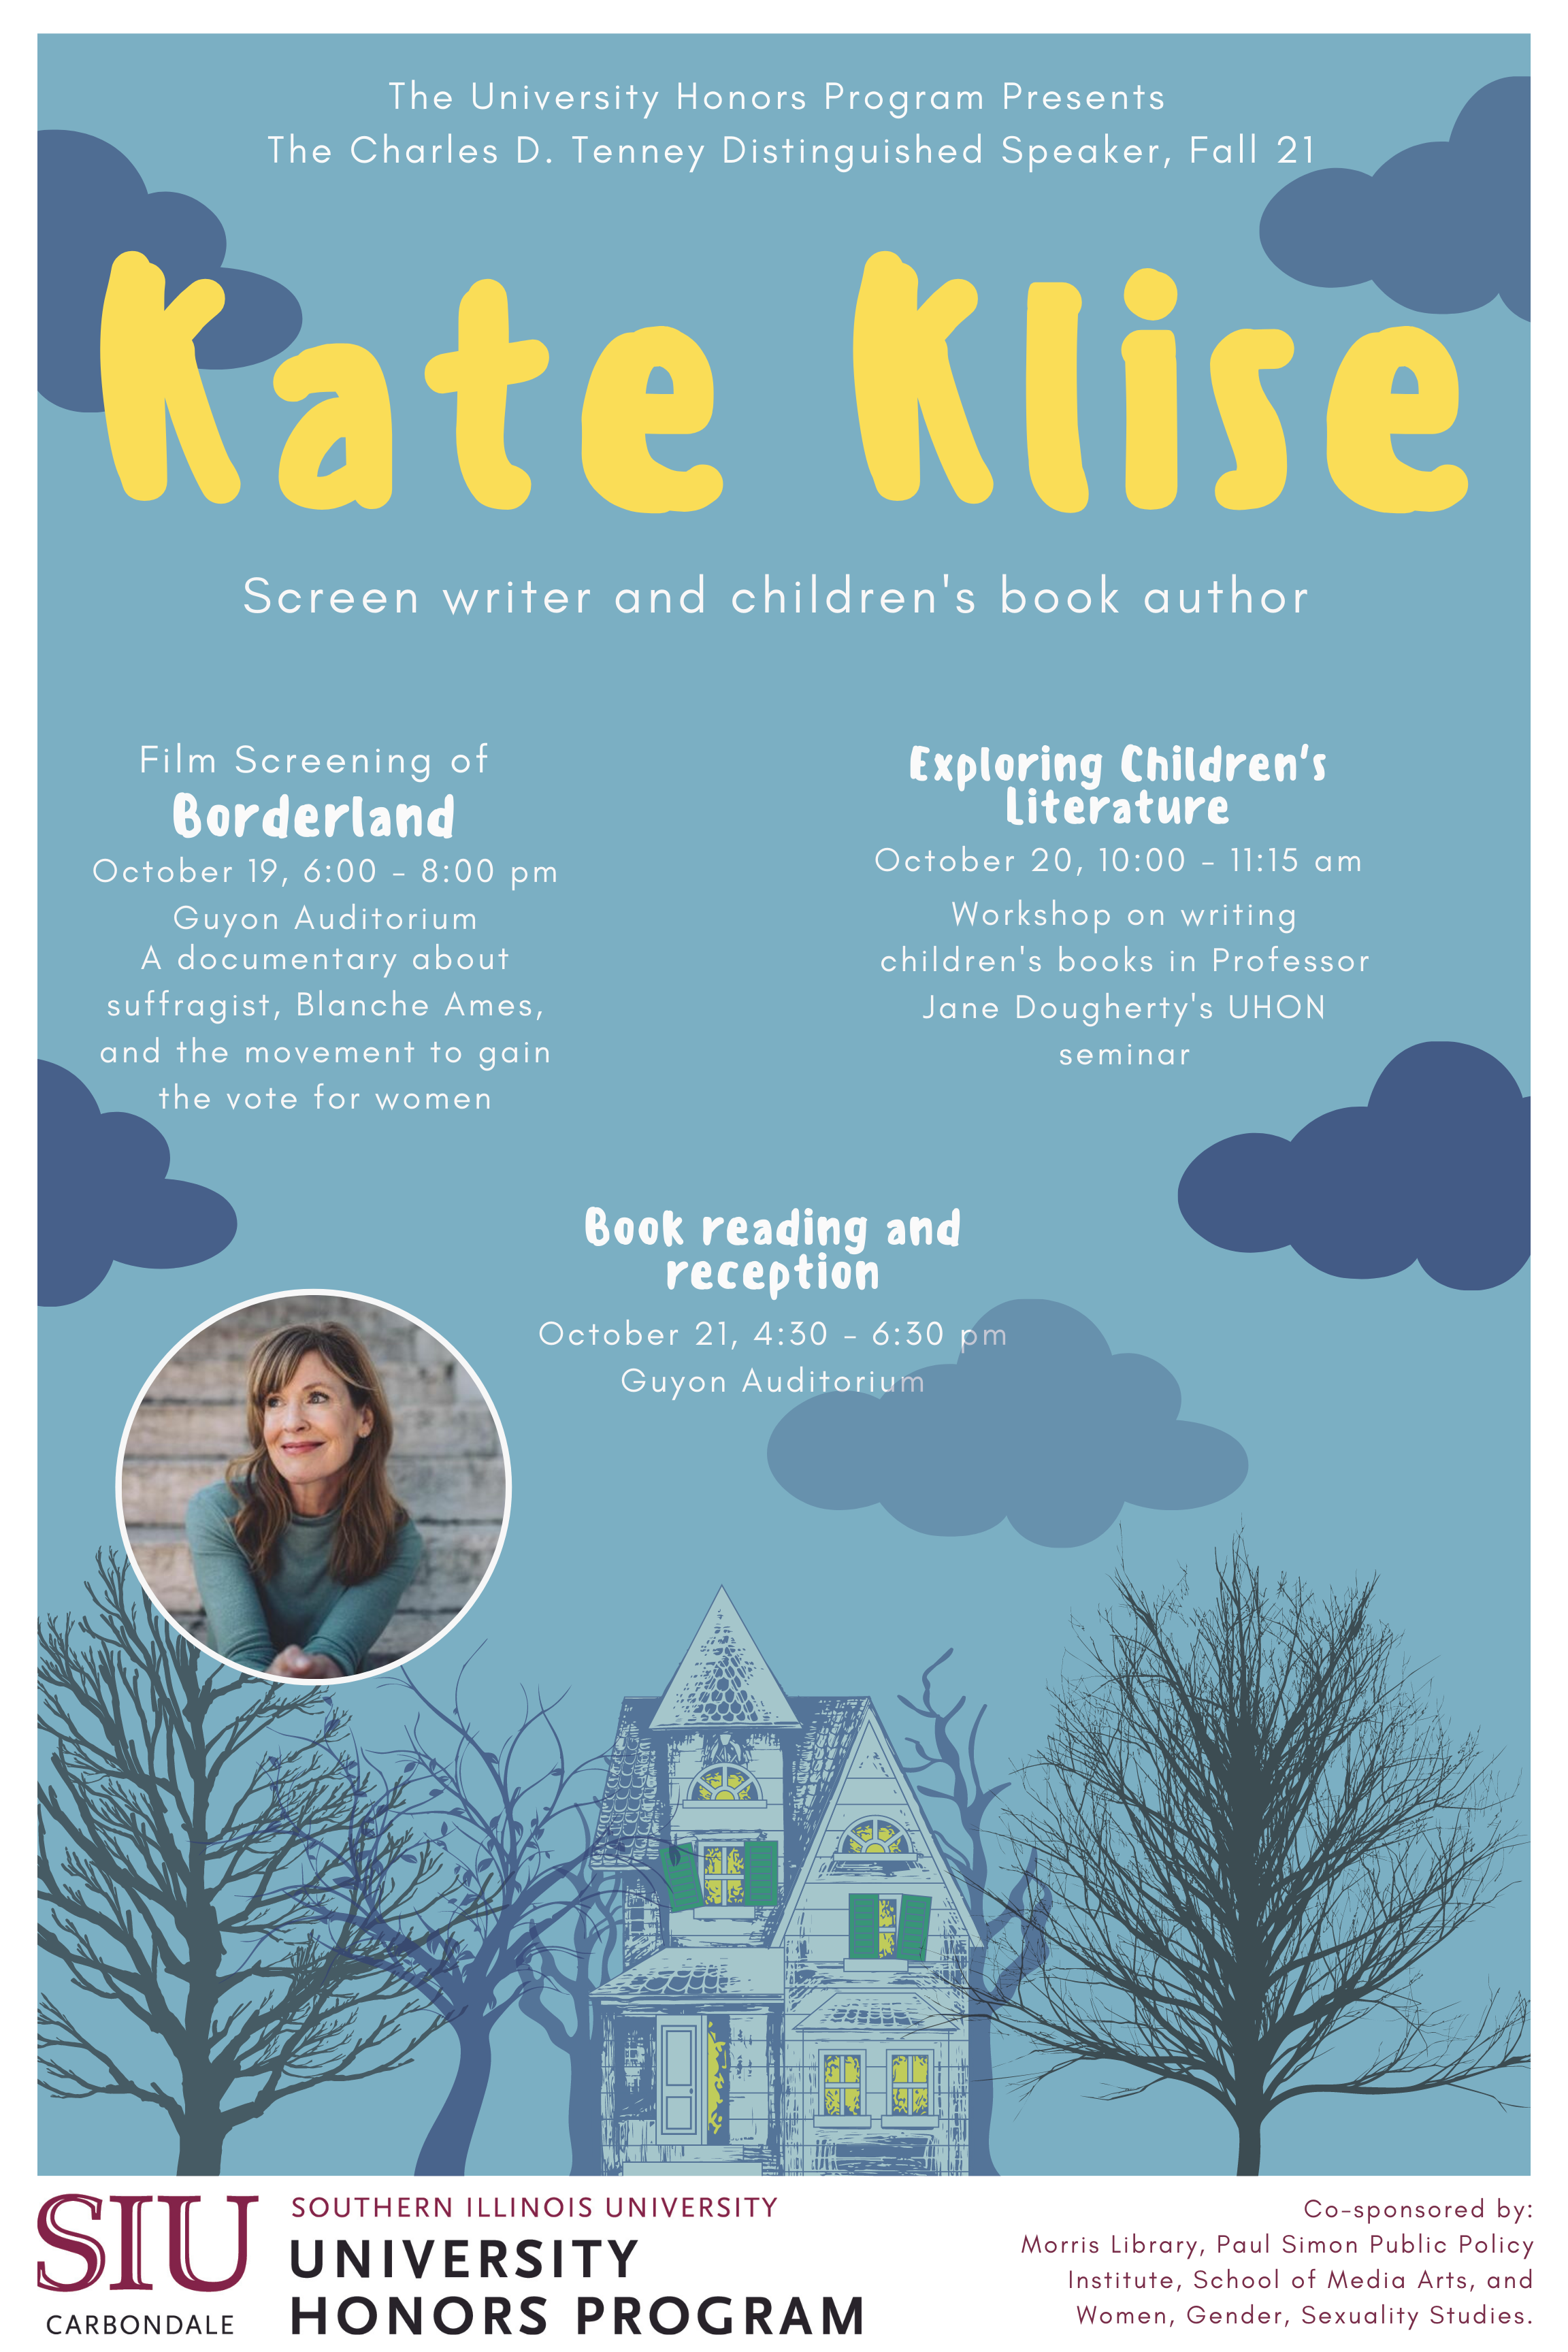 Kate Klise event poster